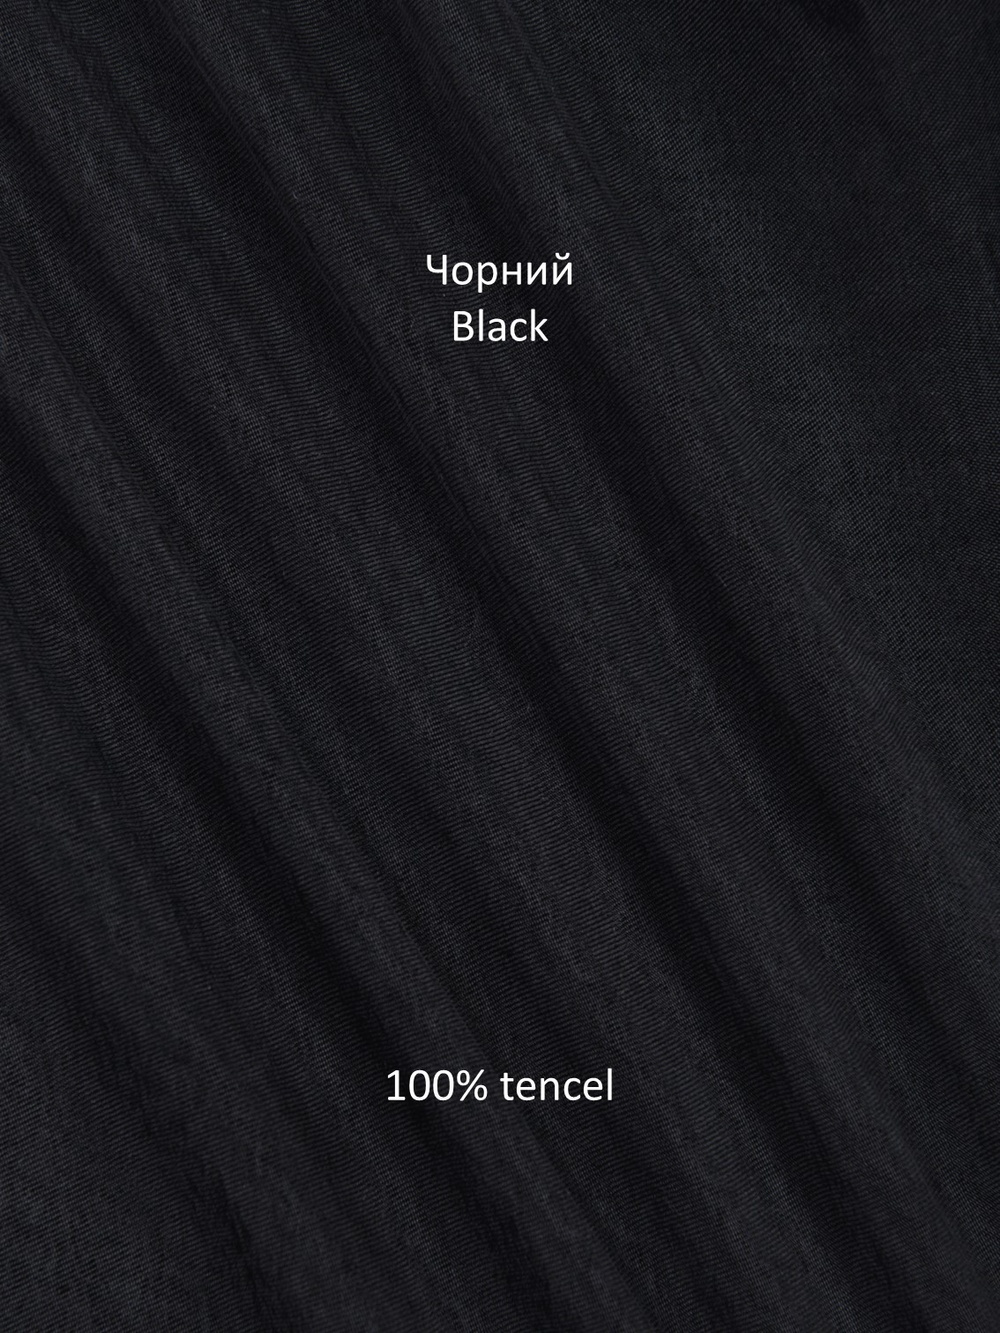 Basic shirt color black